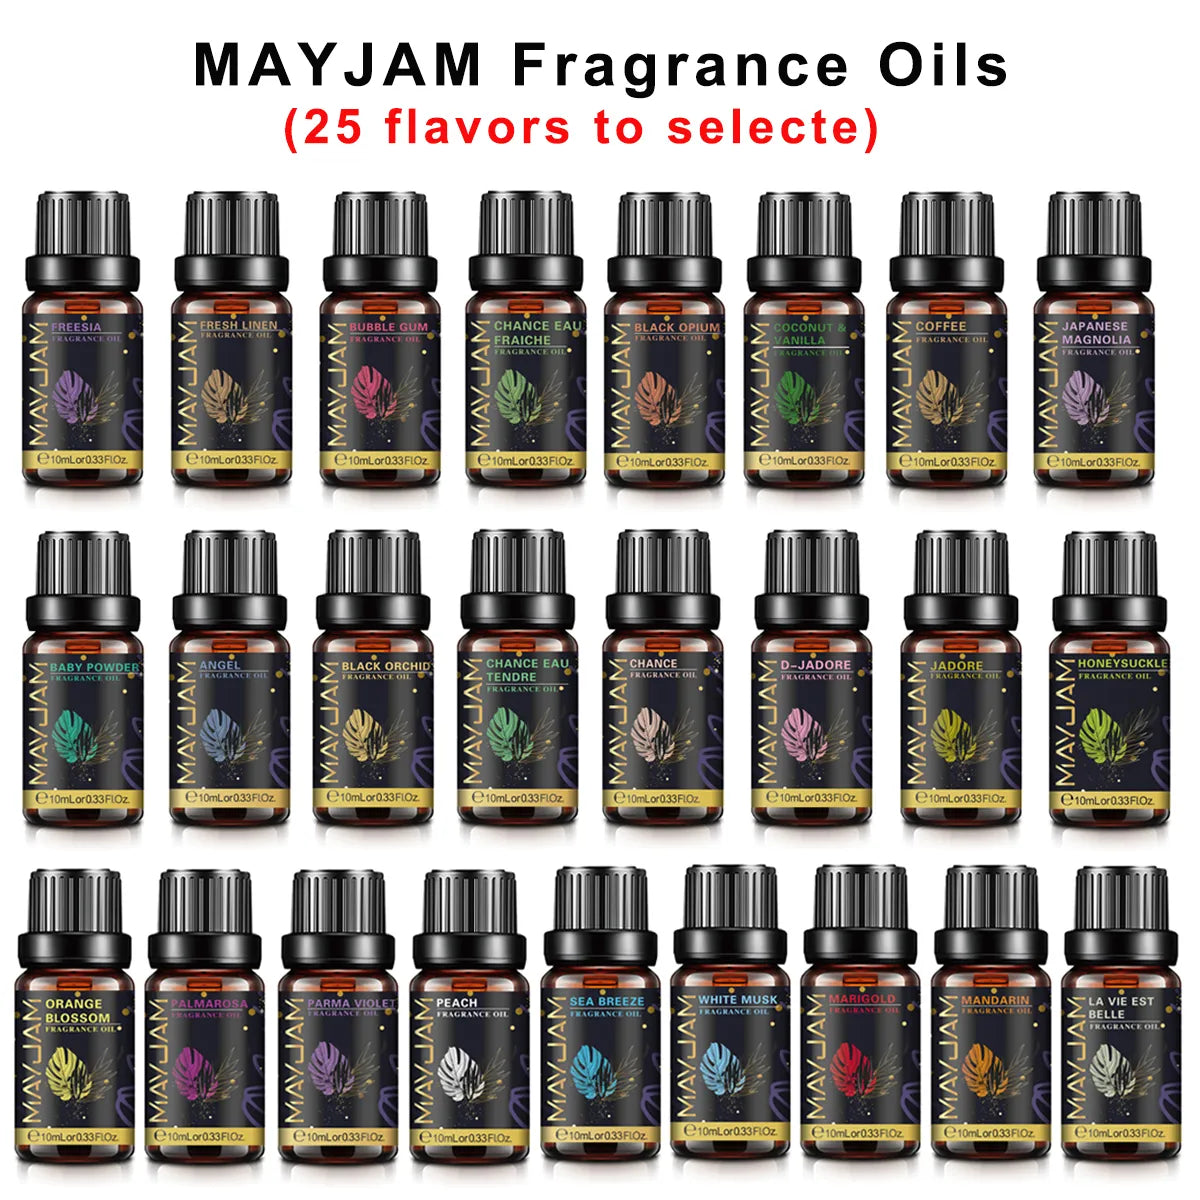 MAYJAM Fragrance Oils For Perfume Candle Making Car Air Freshener Clothes Hair Jadore Angel Magnolia Coconut Vanilla Aroma Oil